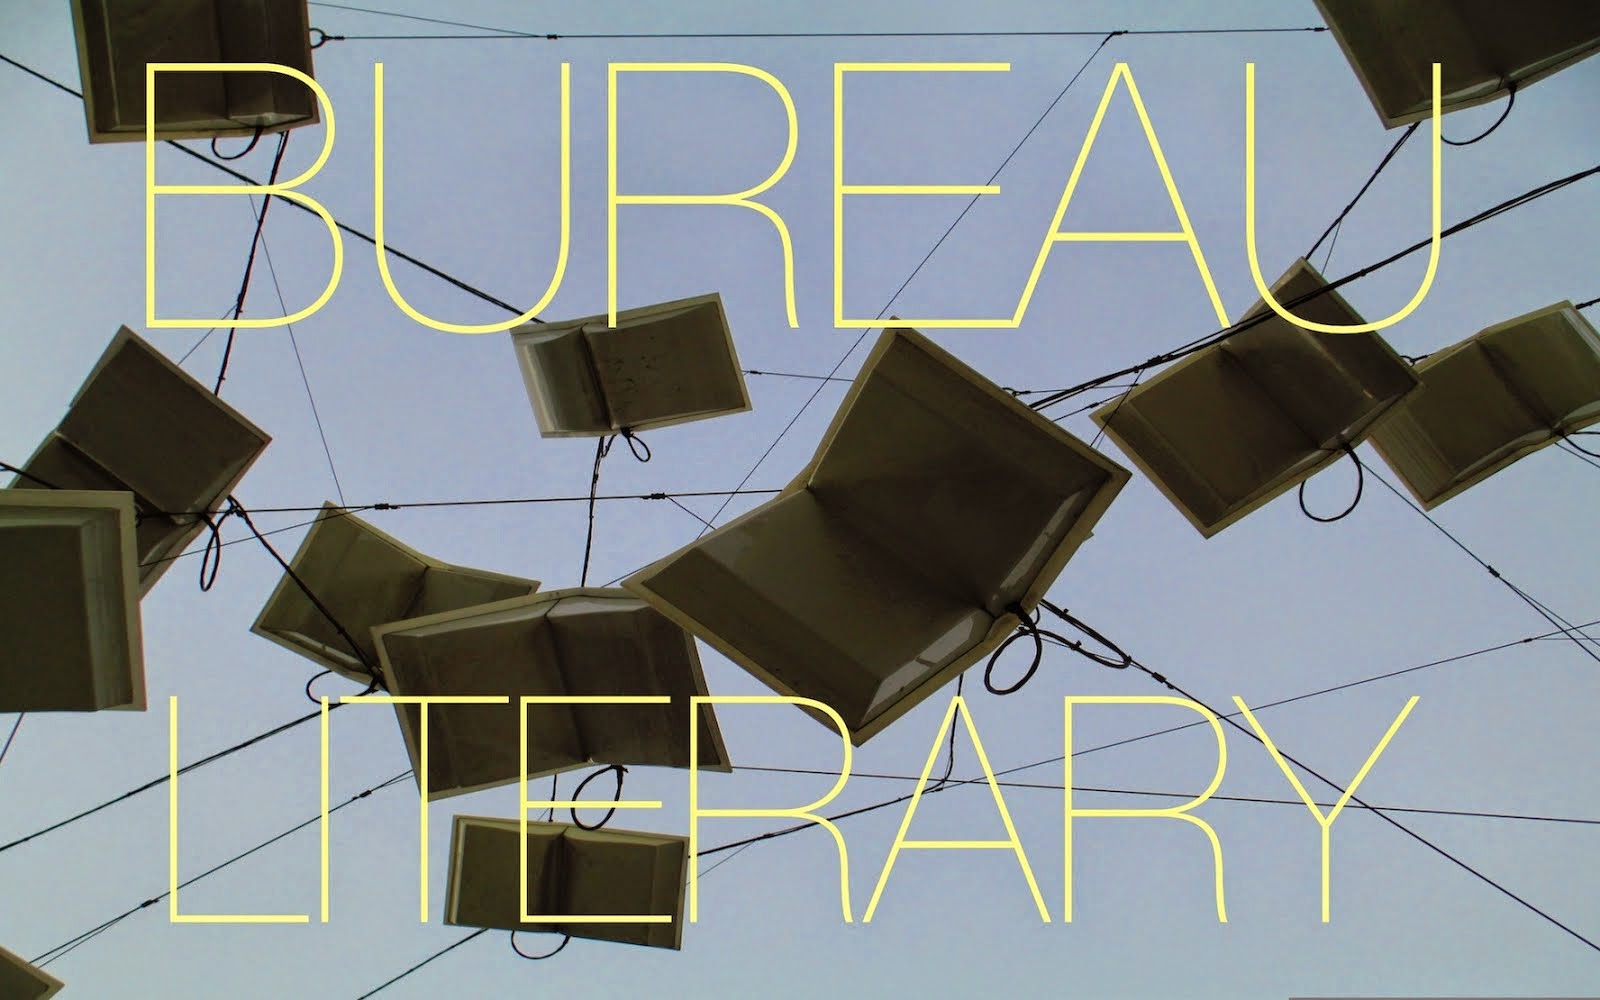 The BUREAU LITERARY Site